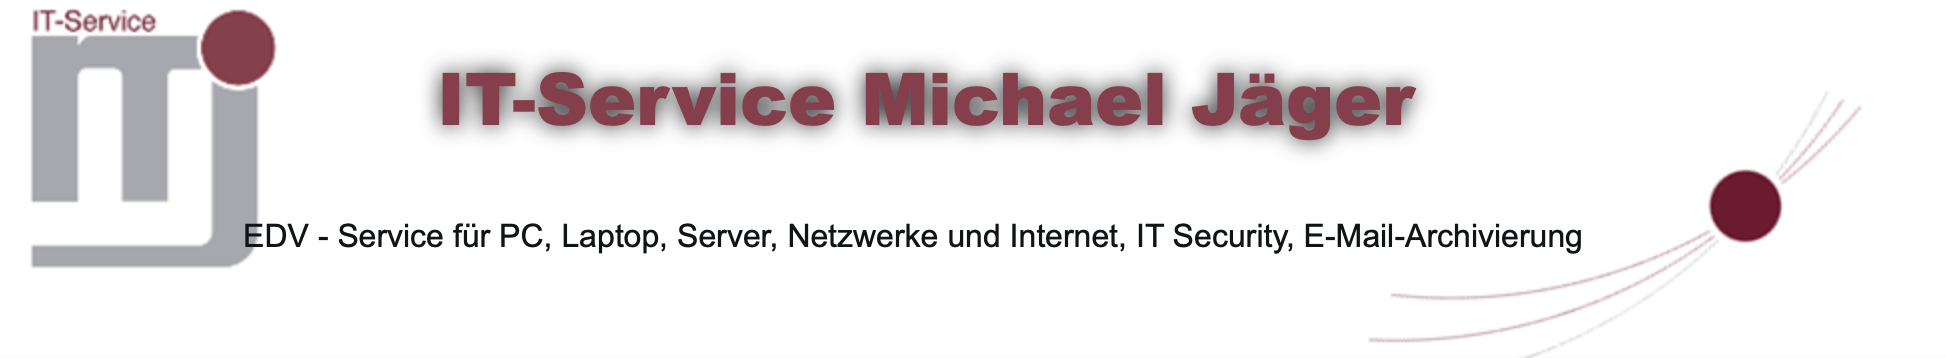 IT-Service-Michael-Jaeger